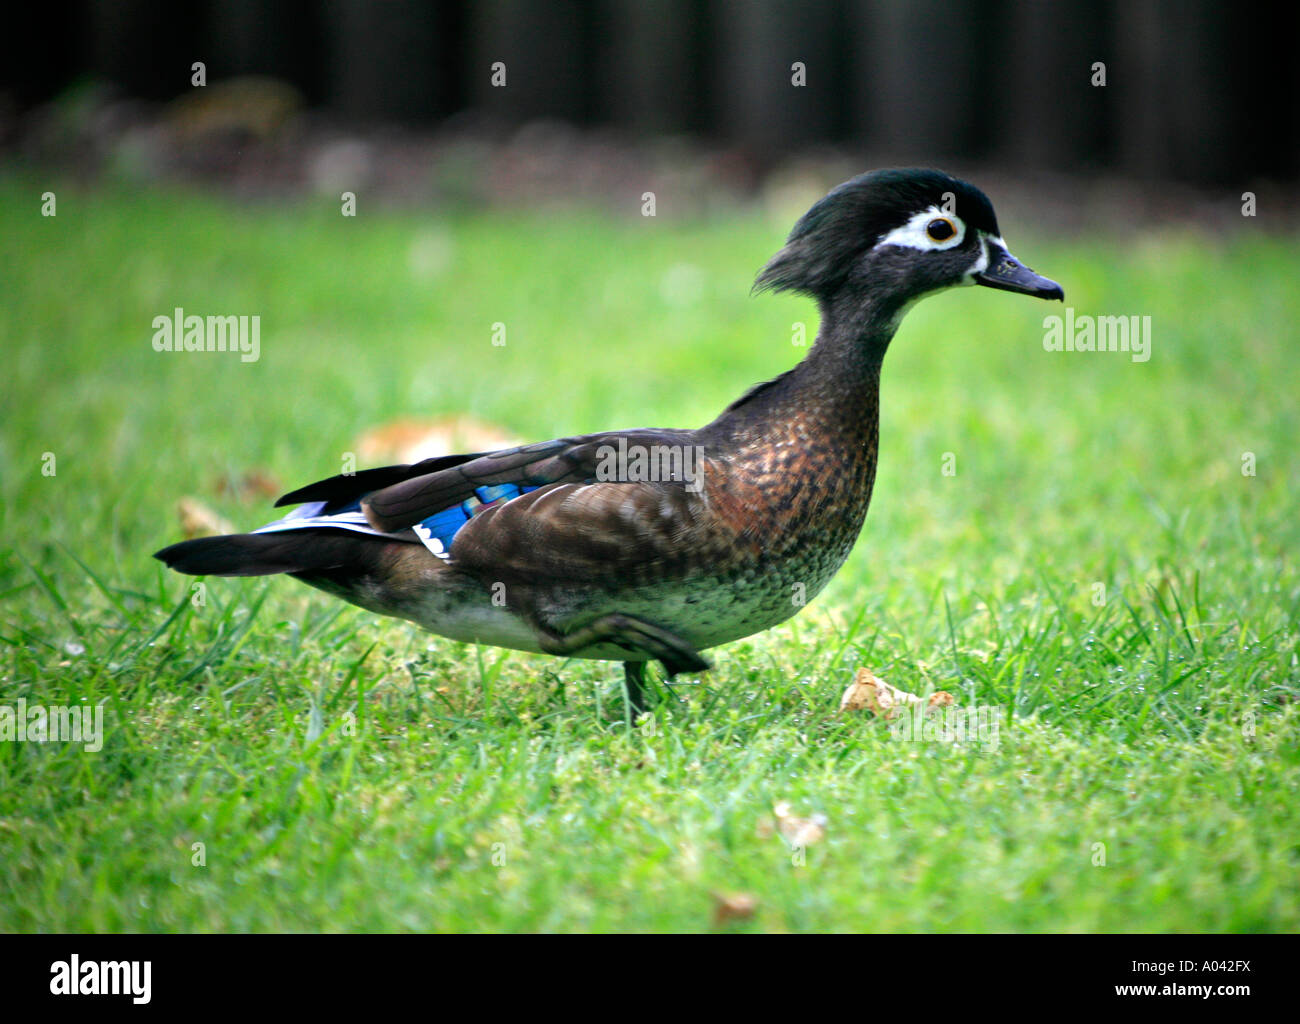 A beautifully colored Carolina duck Stock Photo